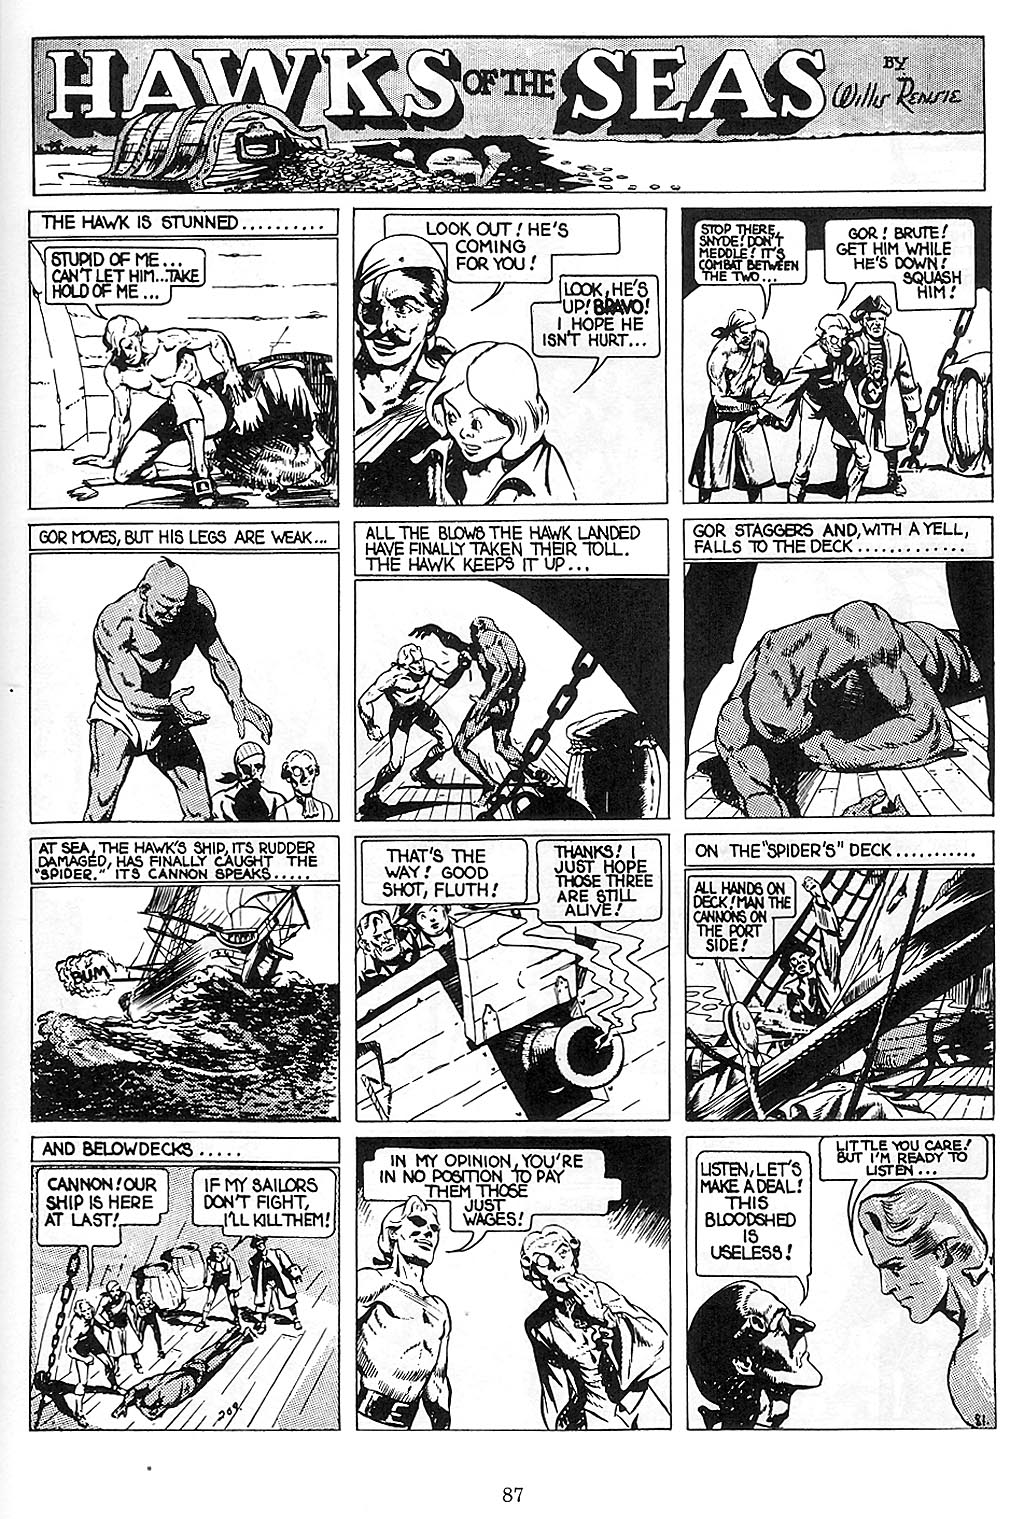 Read online Will Eisner's Hawks of the Seas comic -  Issue # TPB - 88